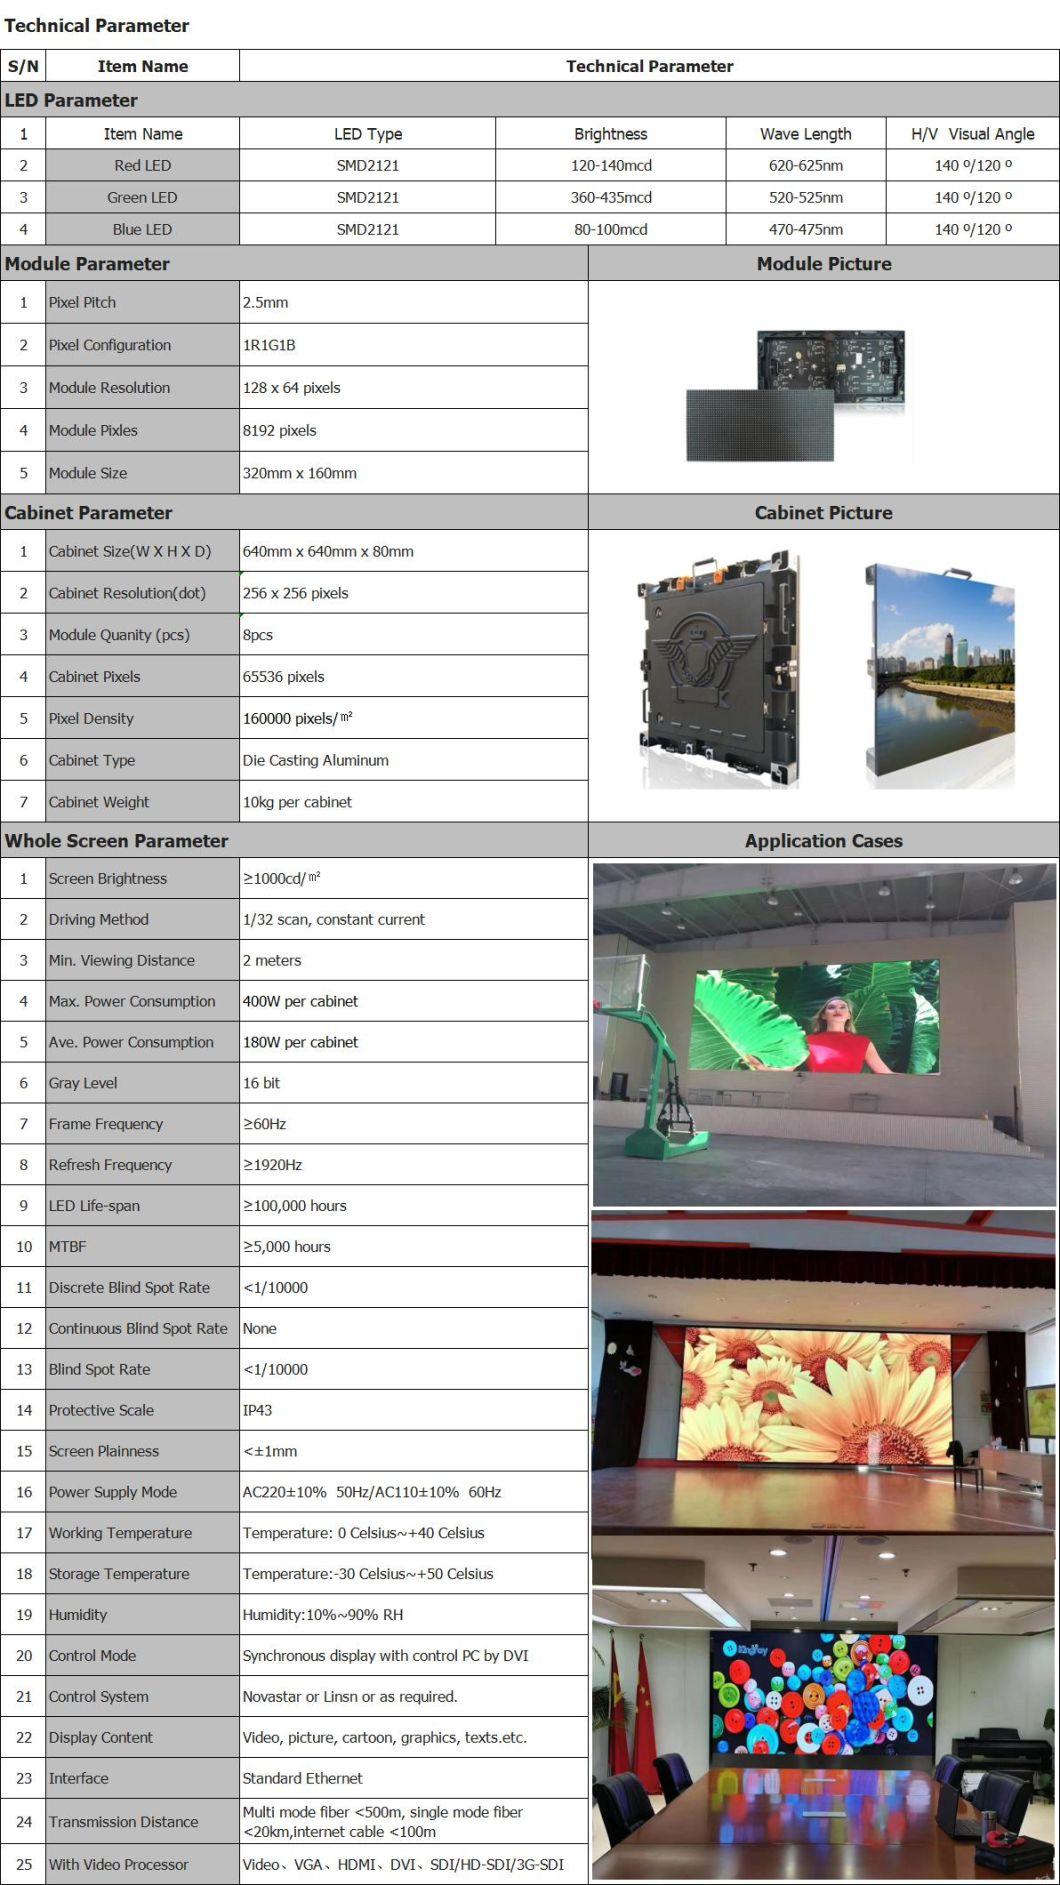 P2.5mm Indoor Stage HD Video Wall Module Rental LED Advertising Display